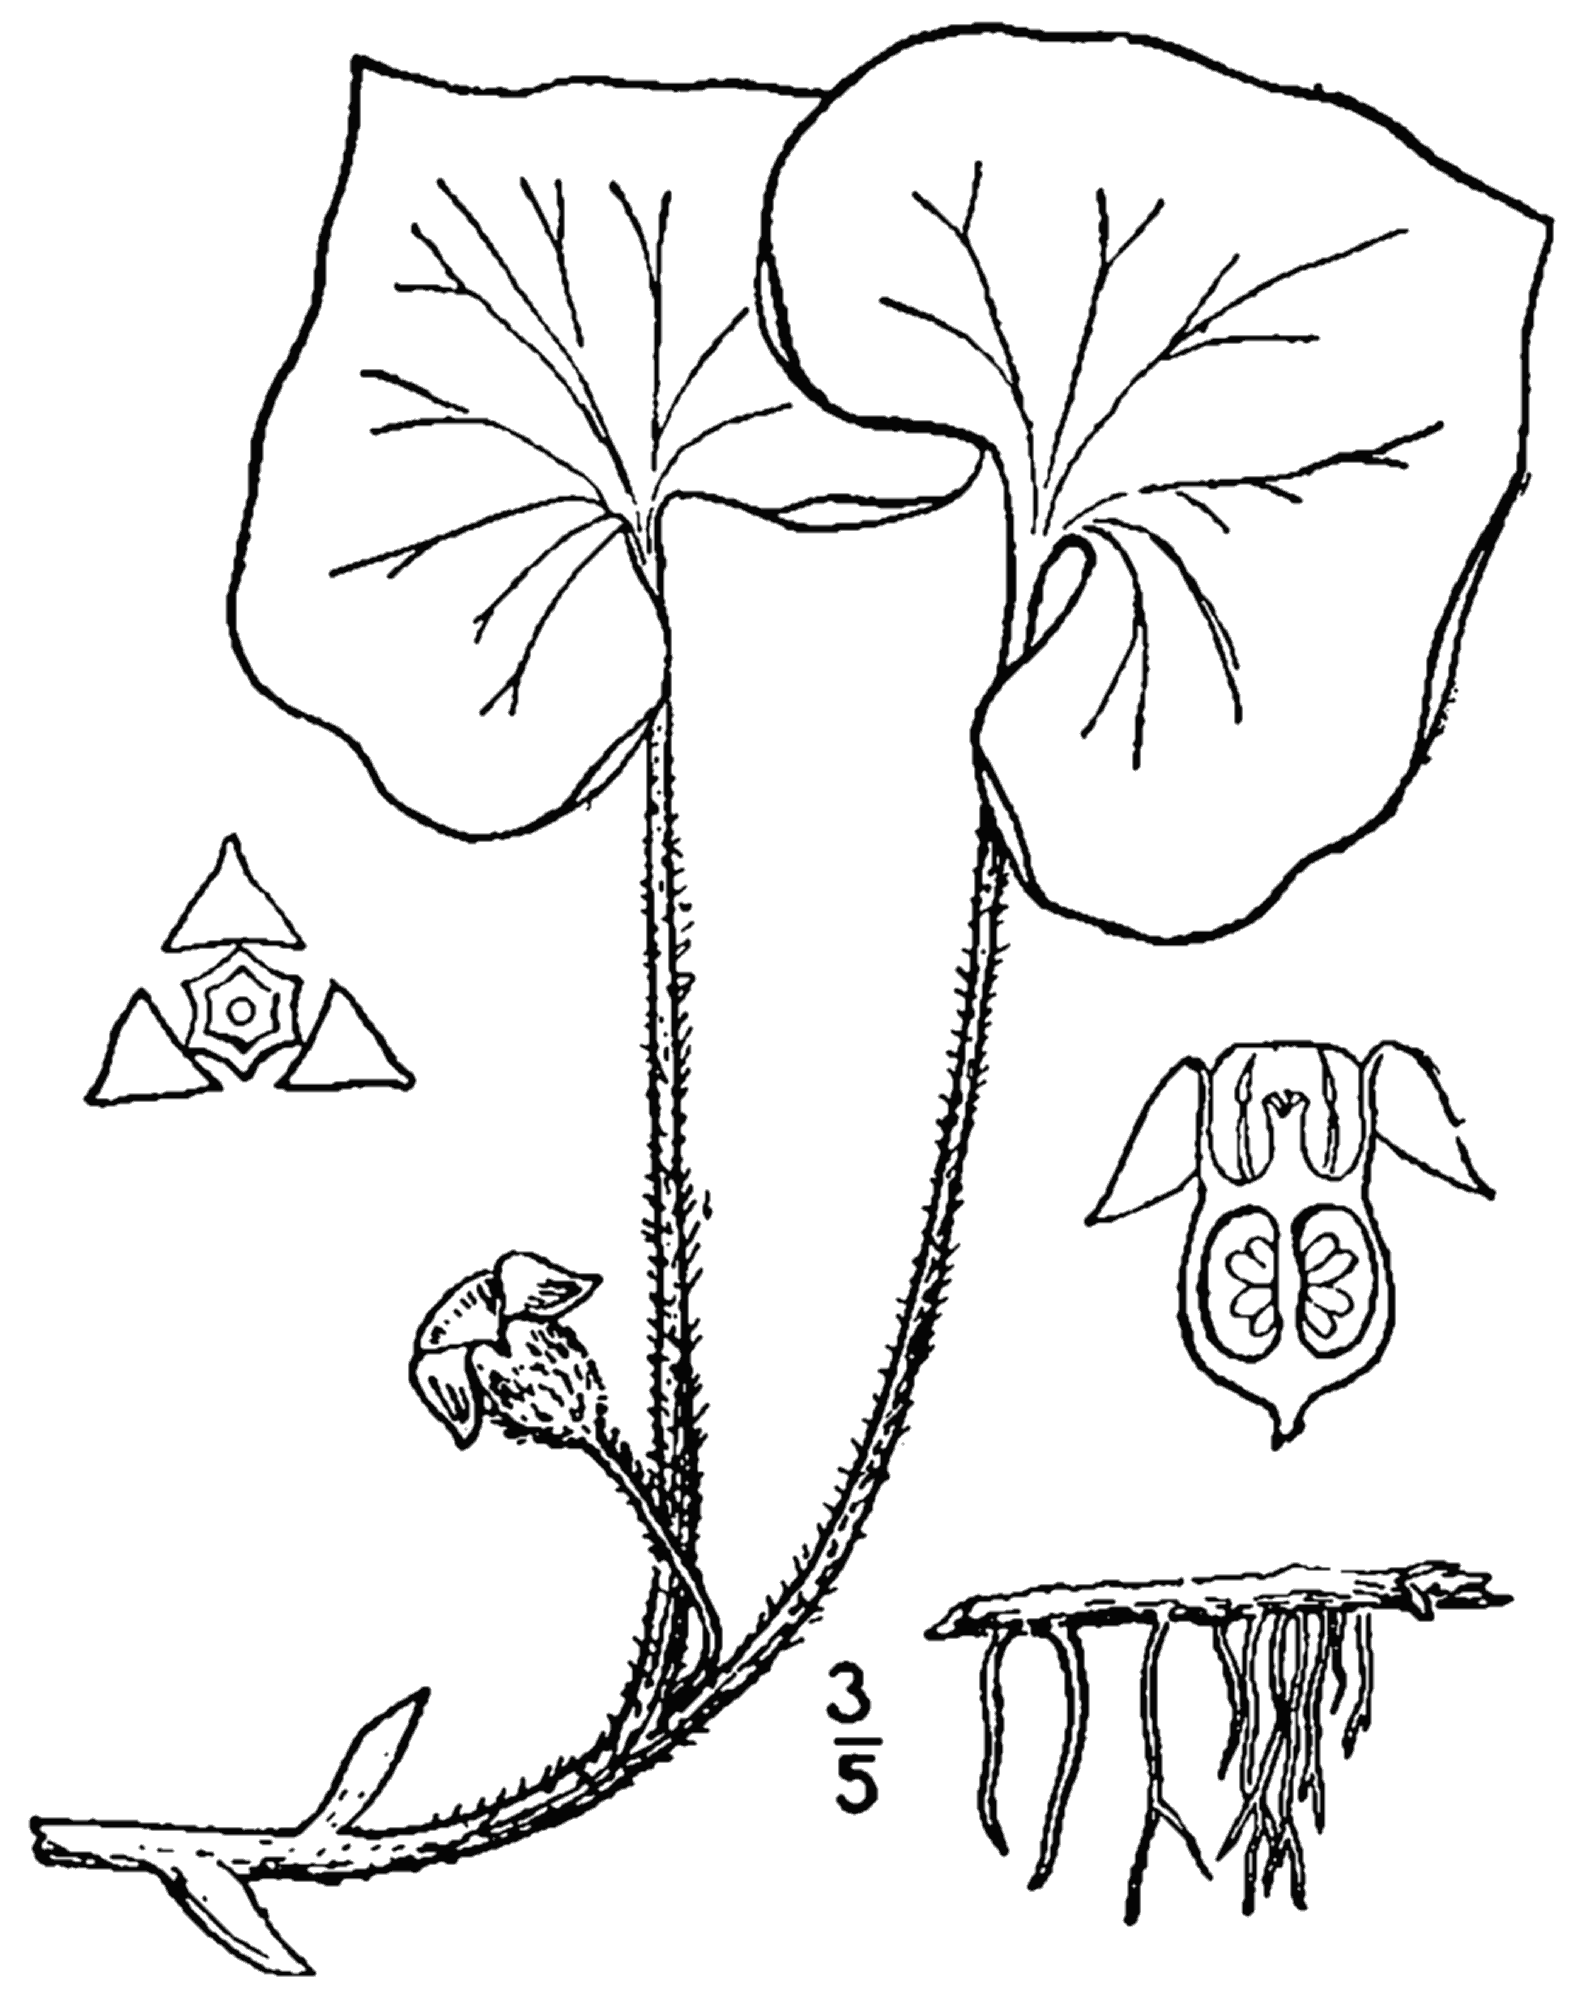 1913 Wild Ginger botanical illustration.